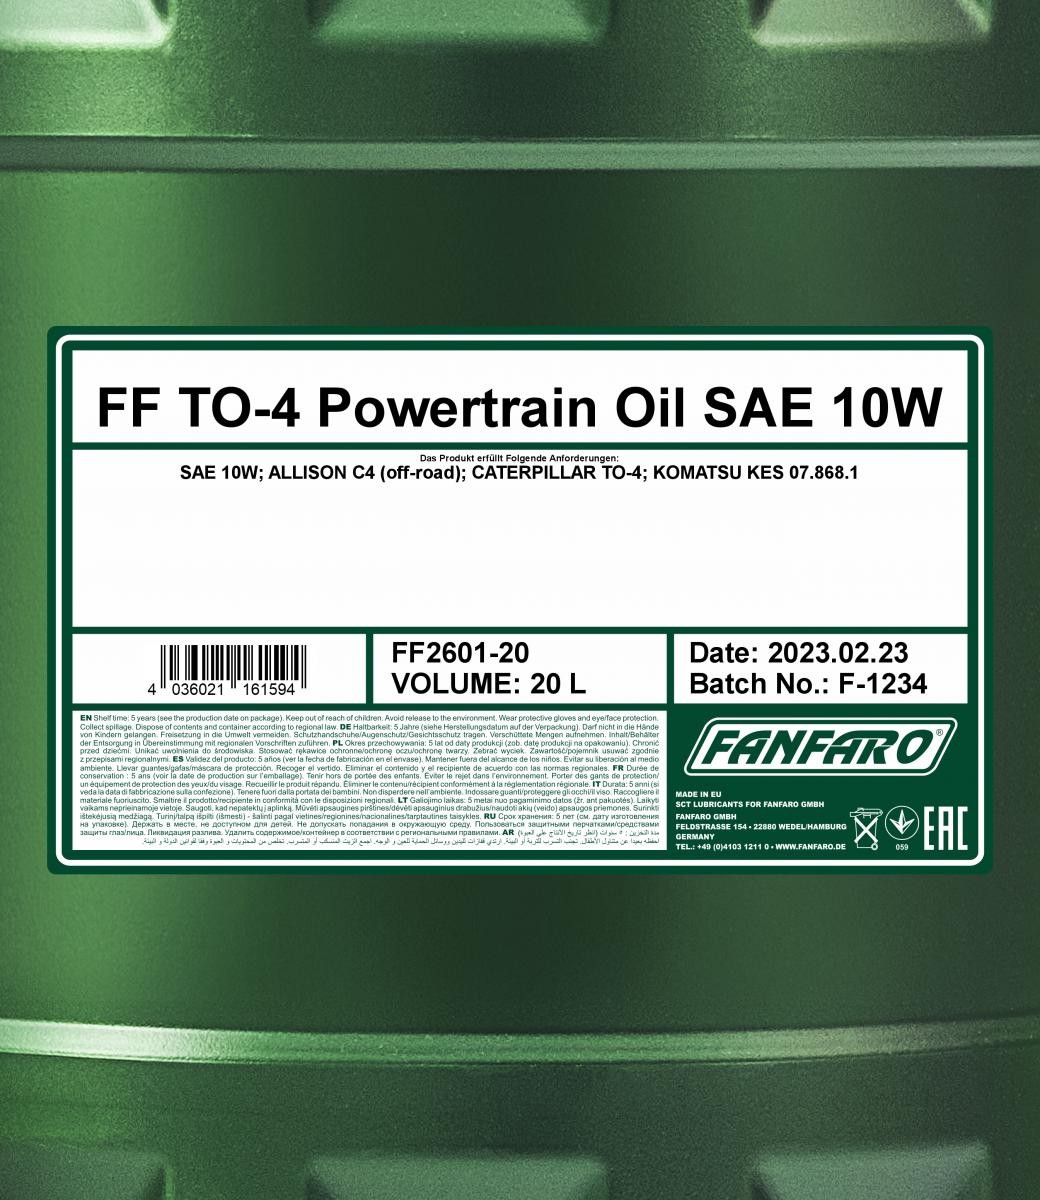 FANFARO Transmission oil FF2601-20